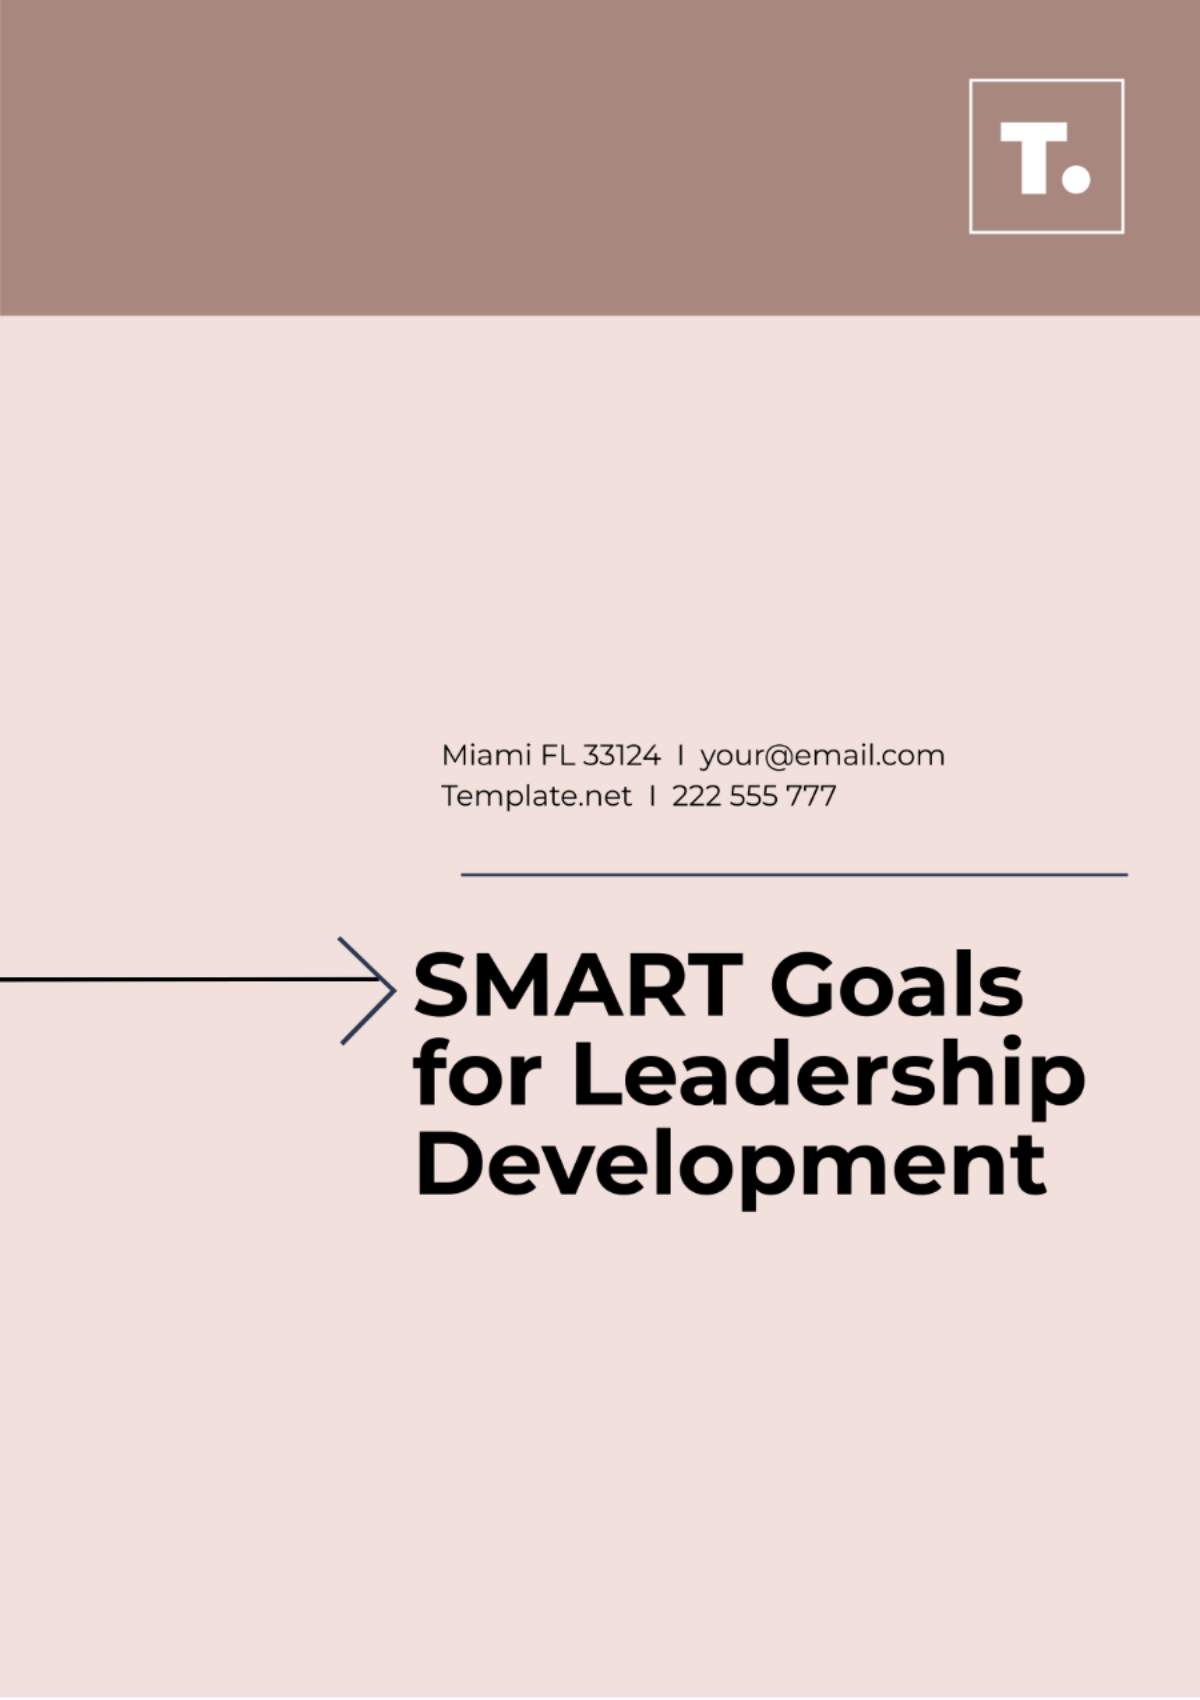 SMART Goals Template for Leadership Development